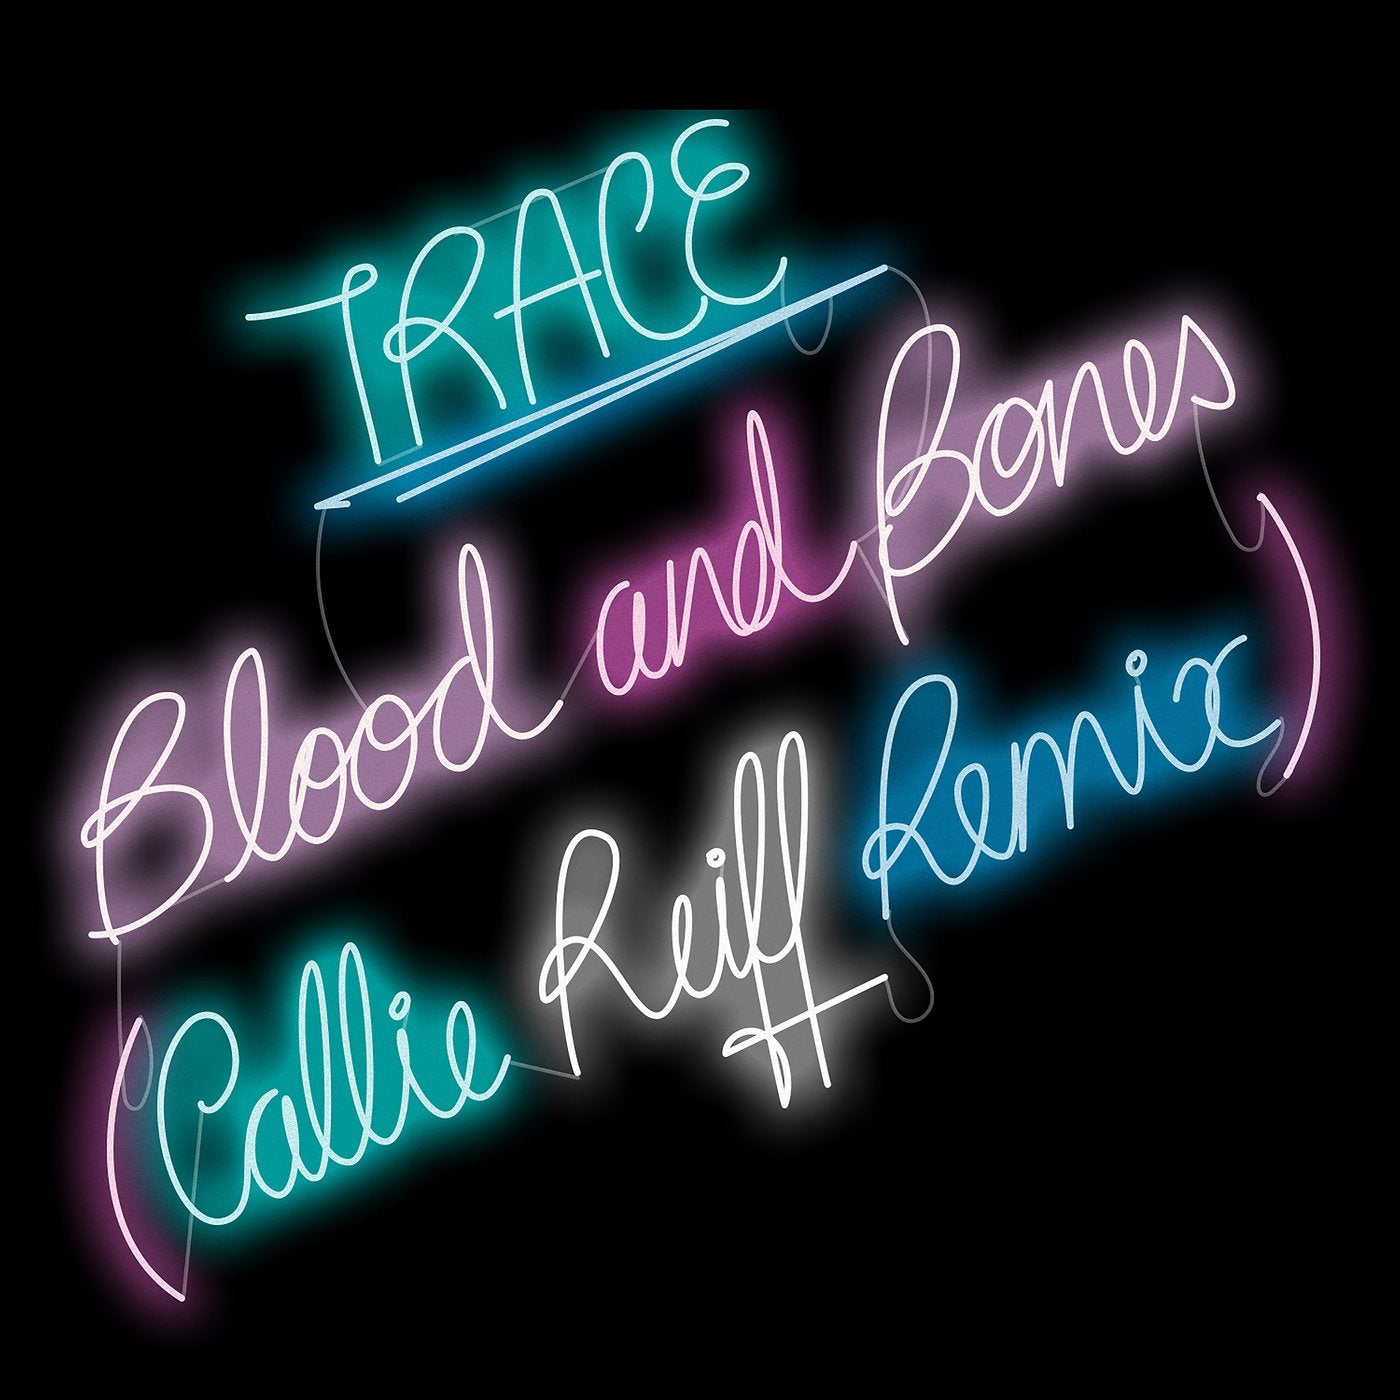 Blood and Bones - Callie Reiff Remix